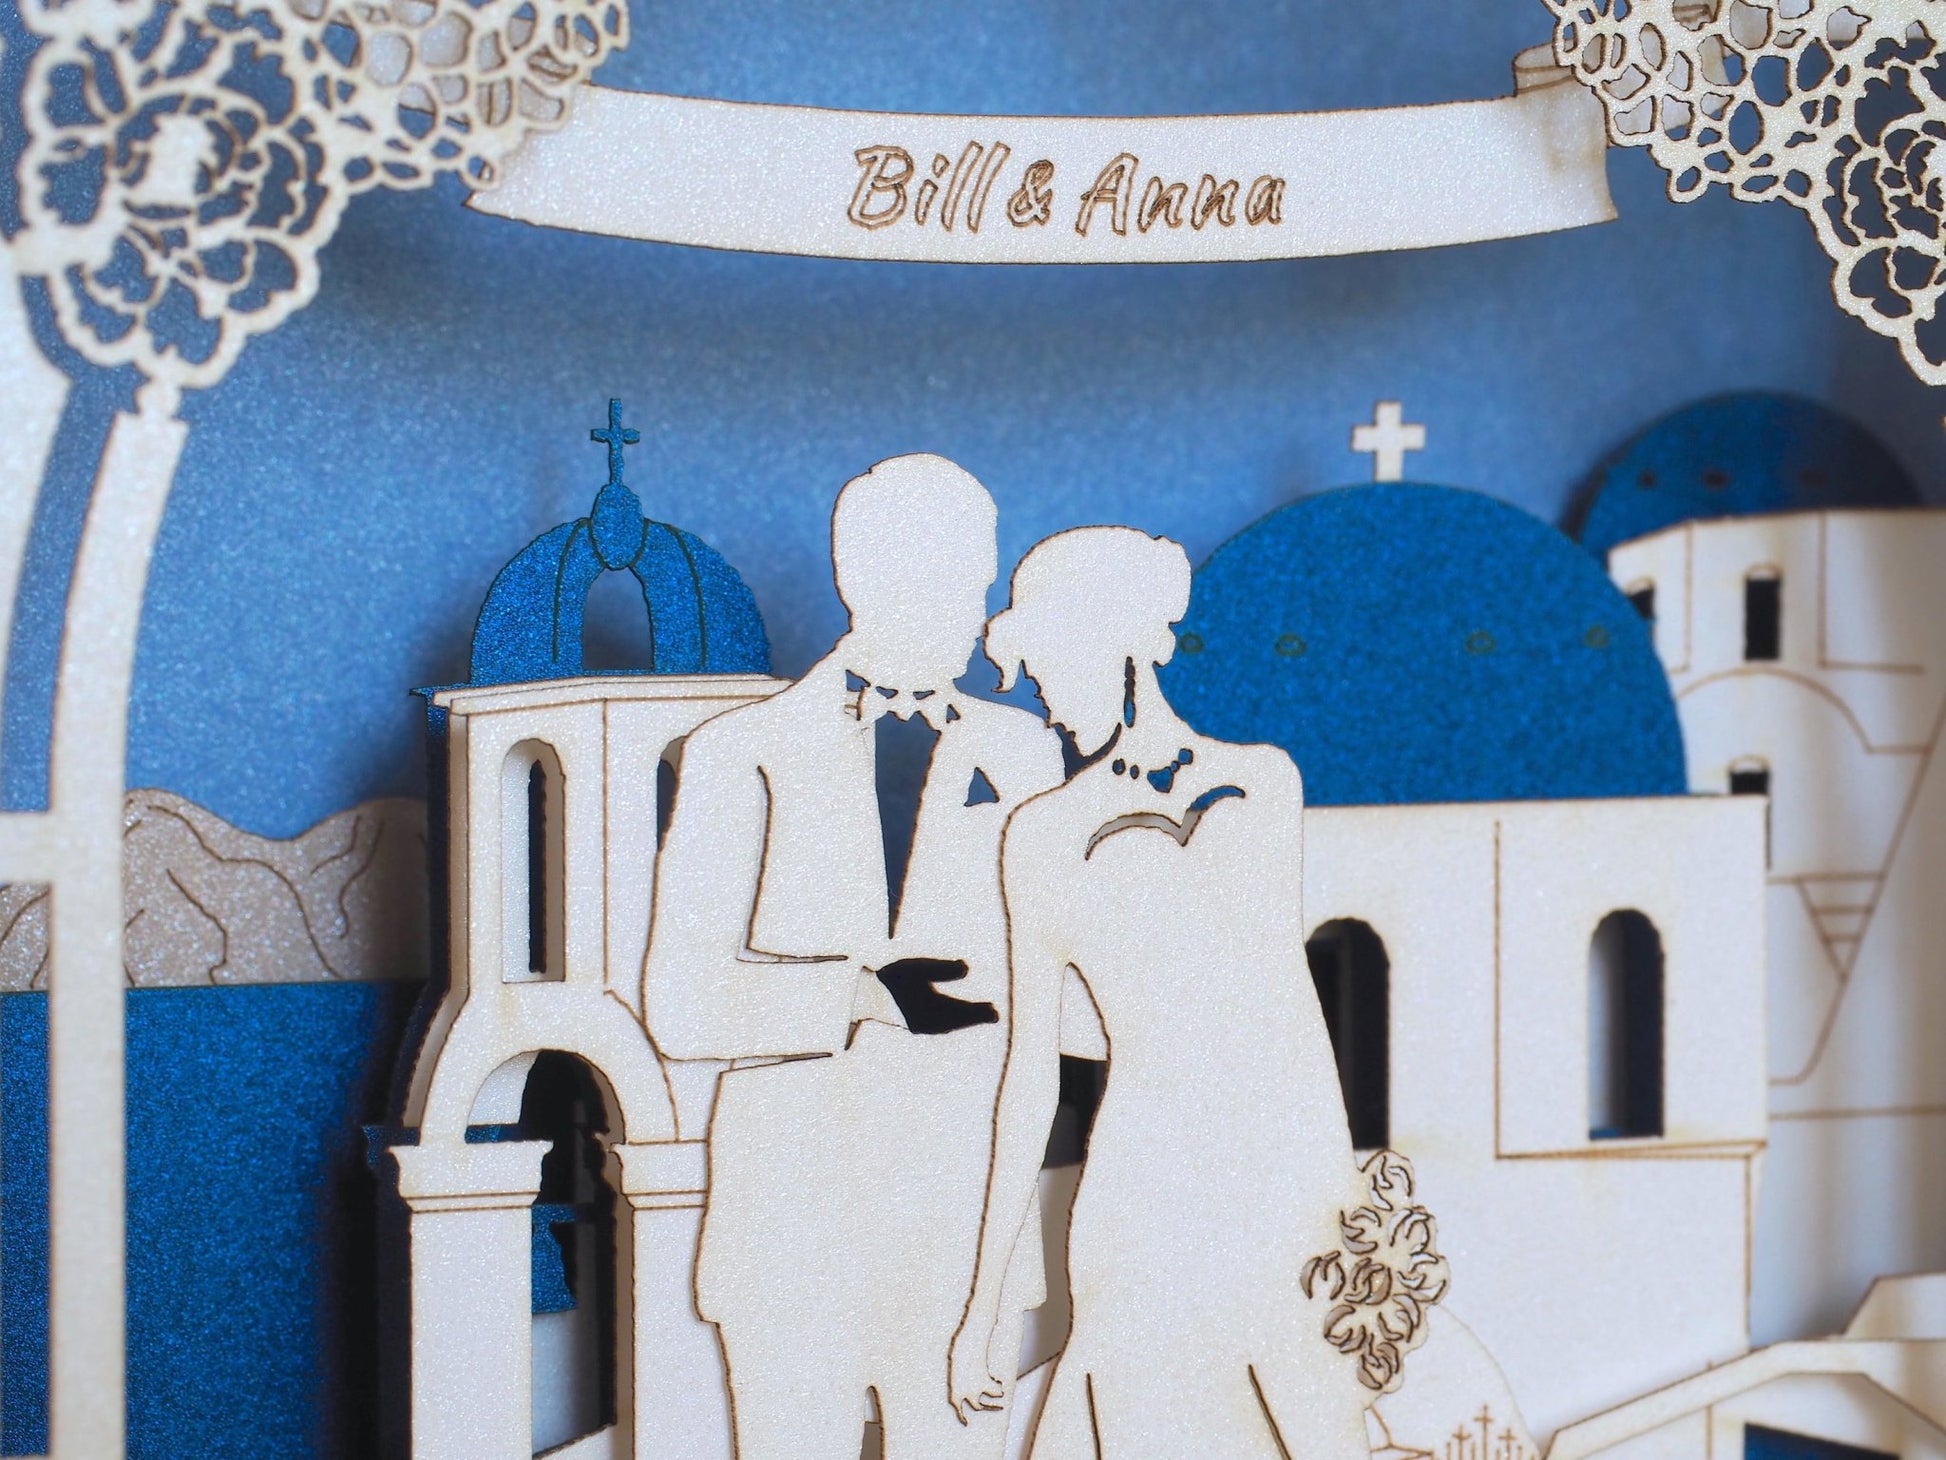 Santorini Greece wedding invitations RSVP pop-up cards Save the Date Sea Beach wedding - ColibriGift